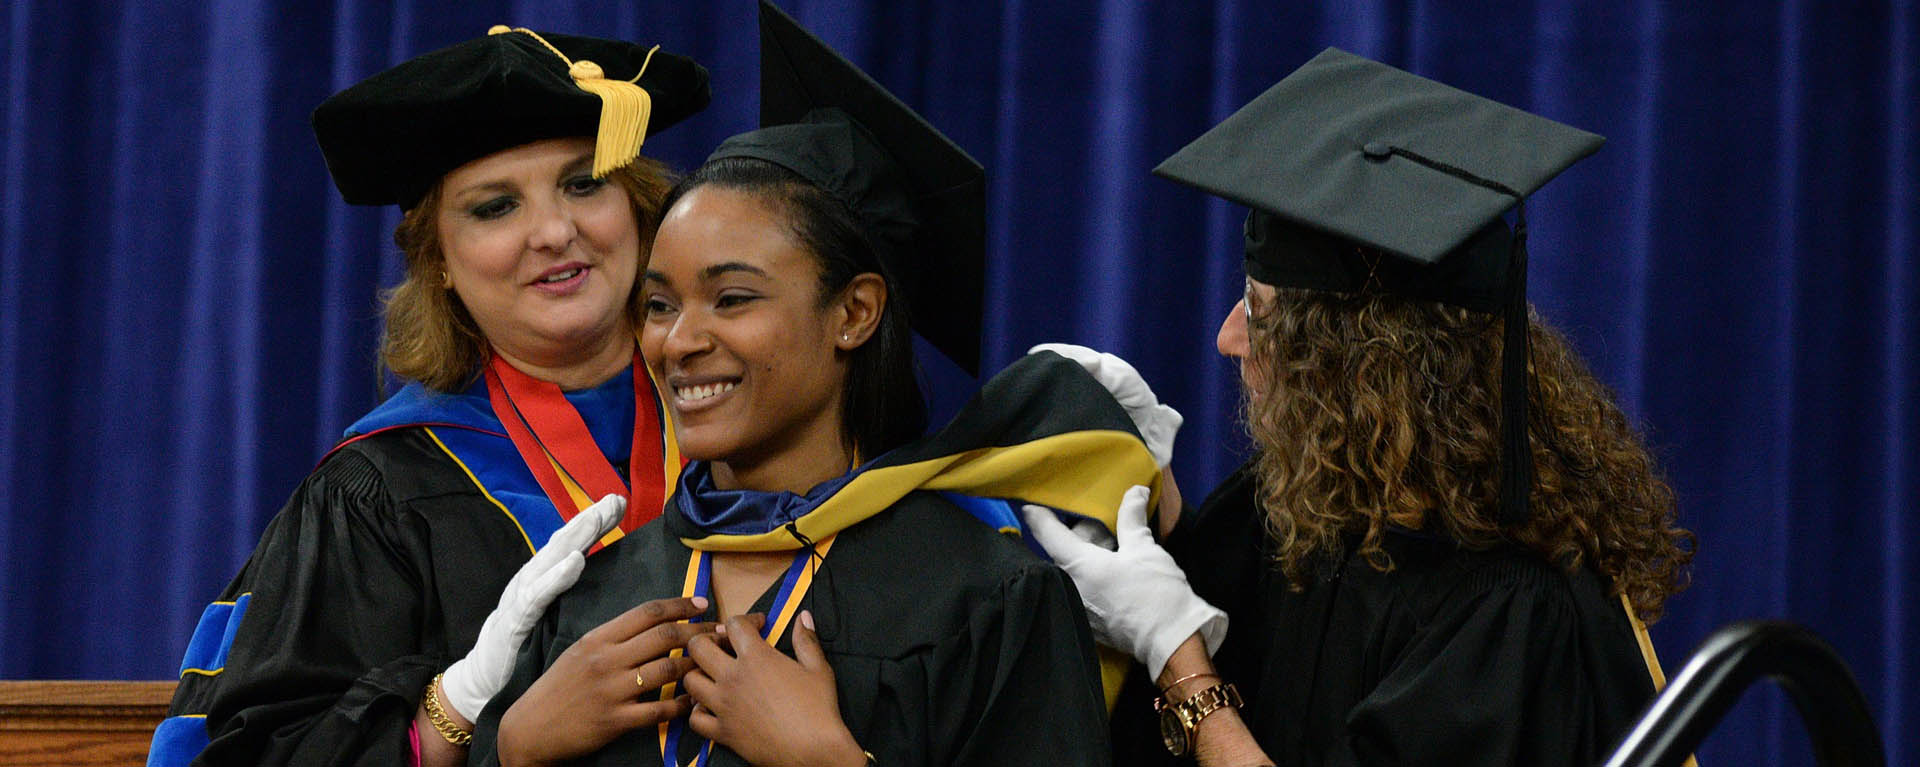 Graduating female student smiling